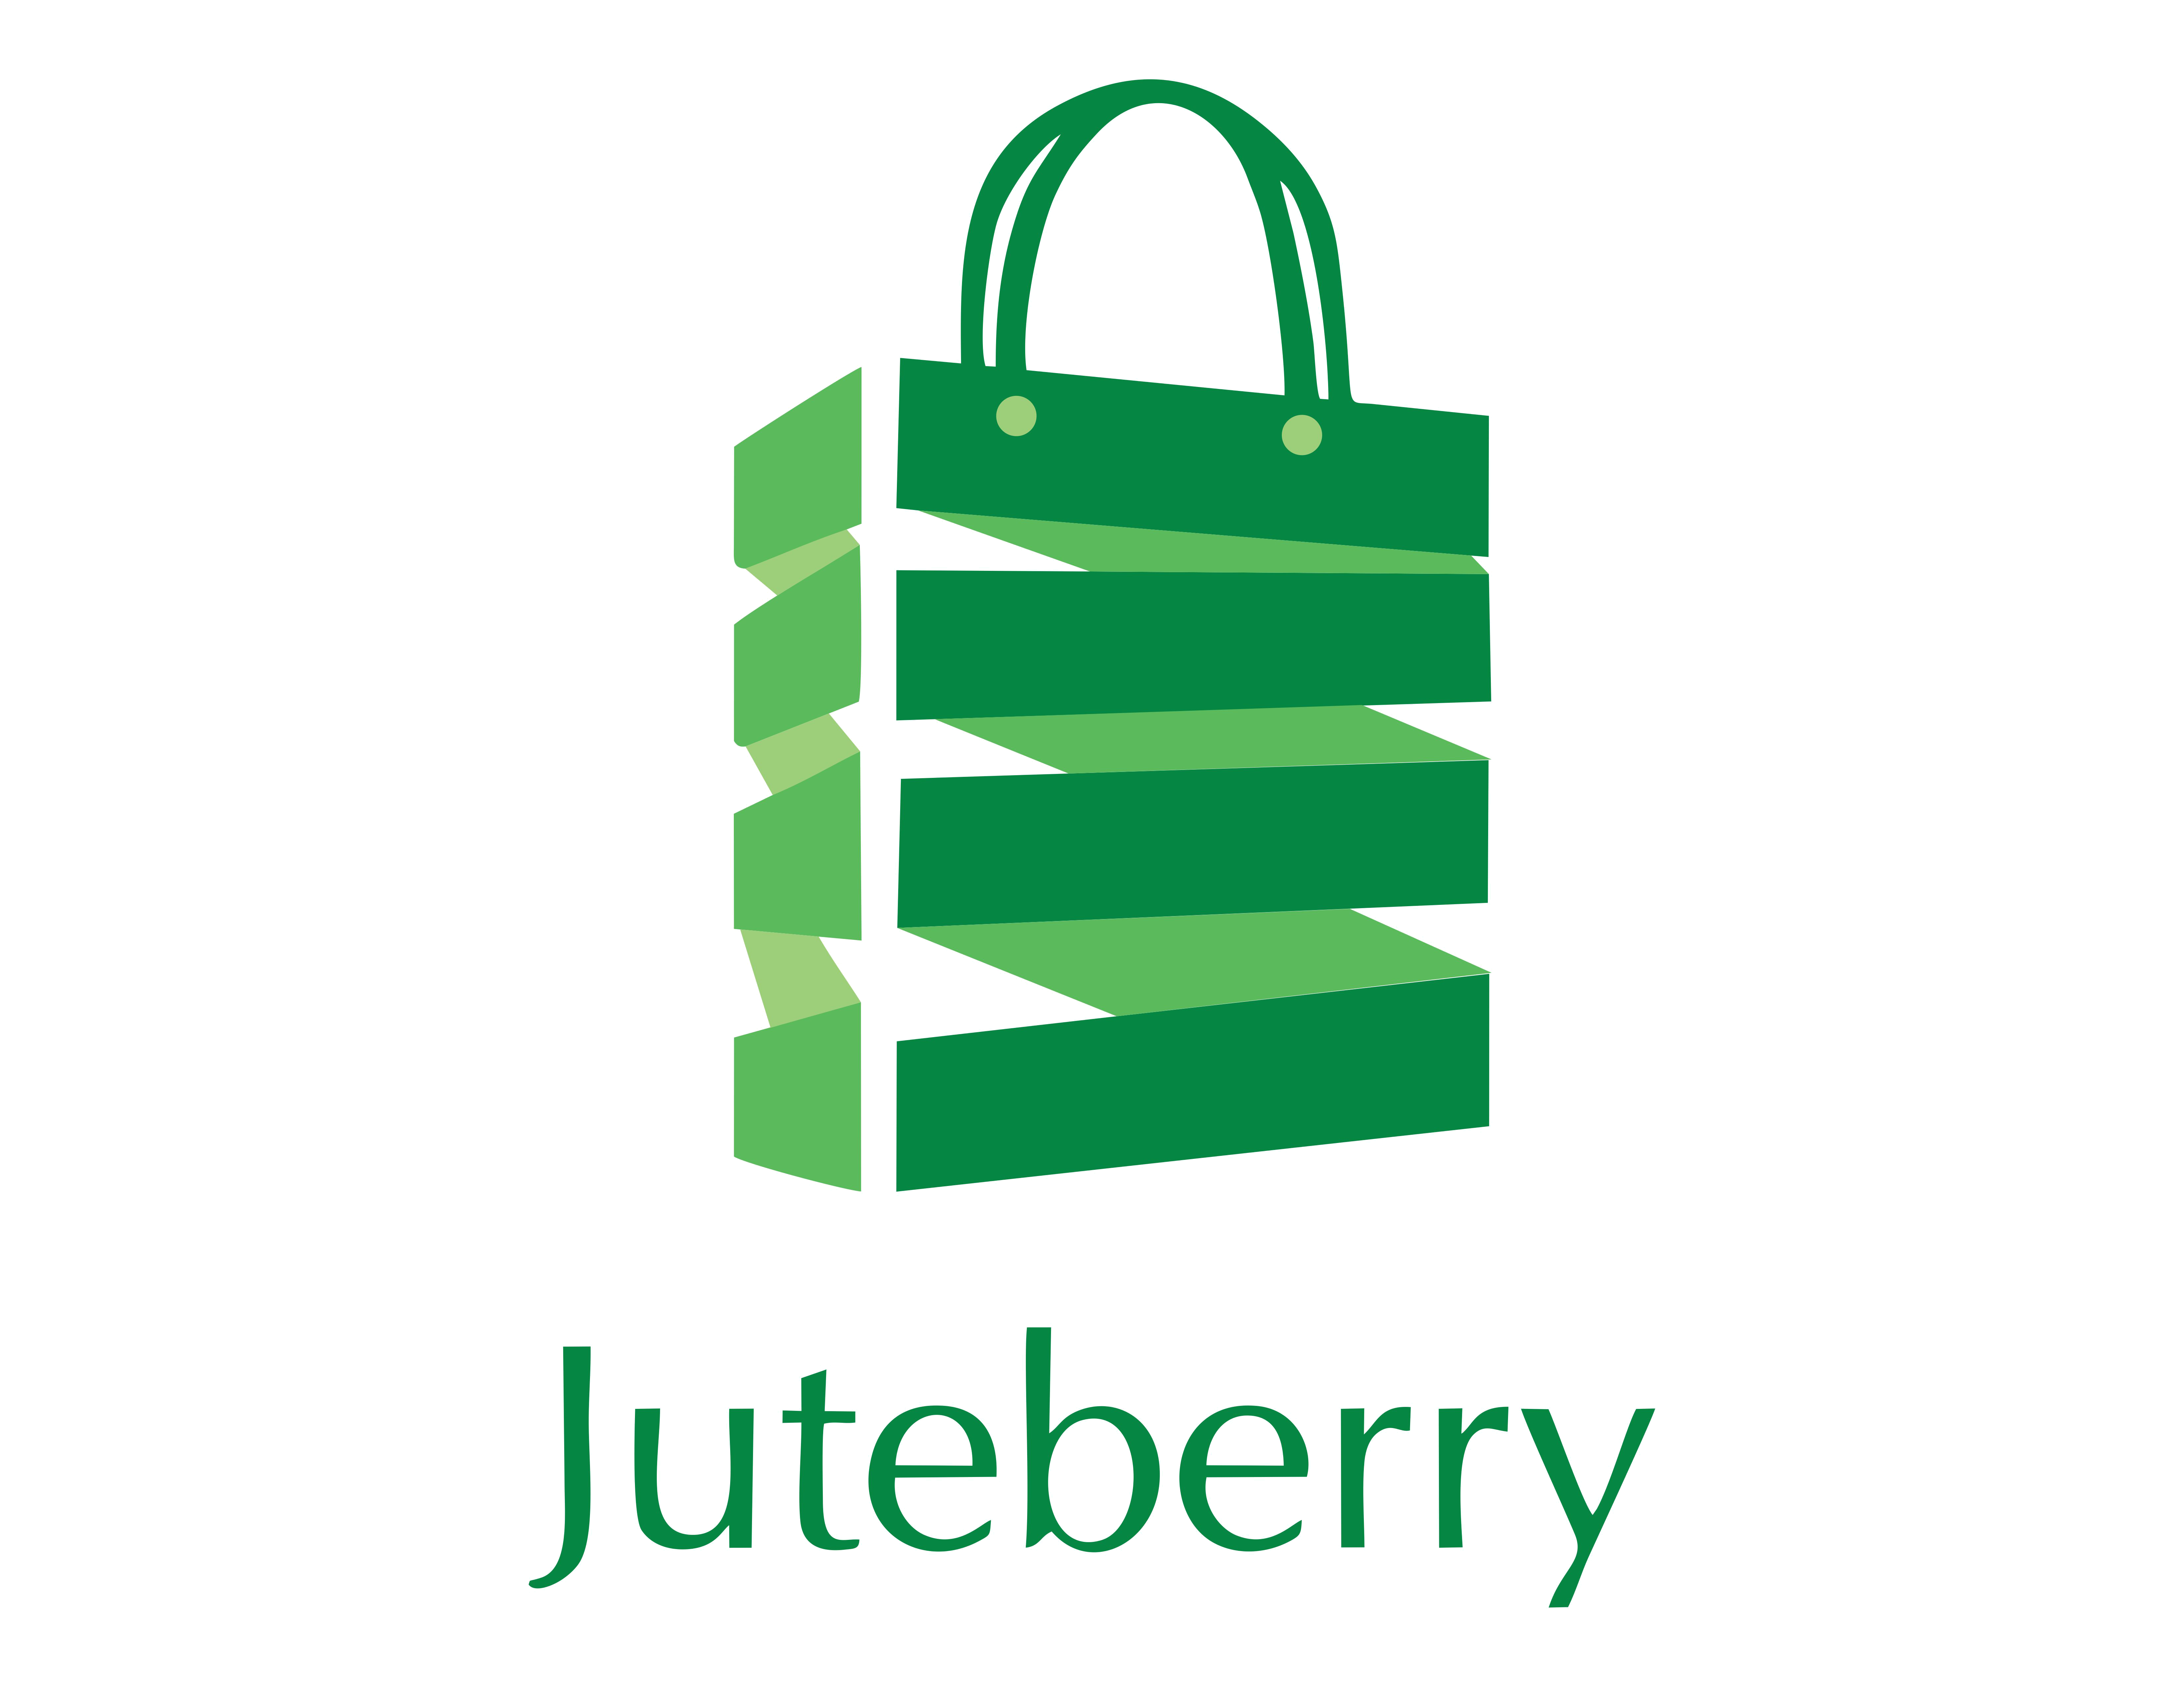 Juteberry